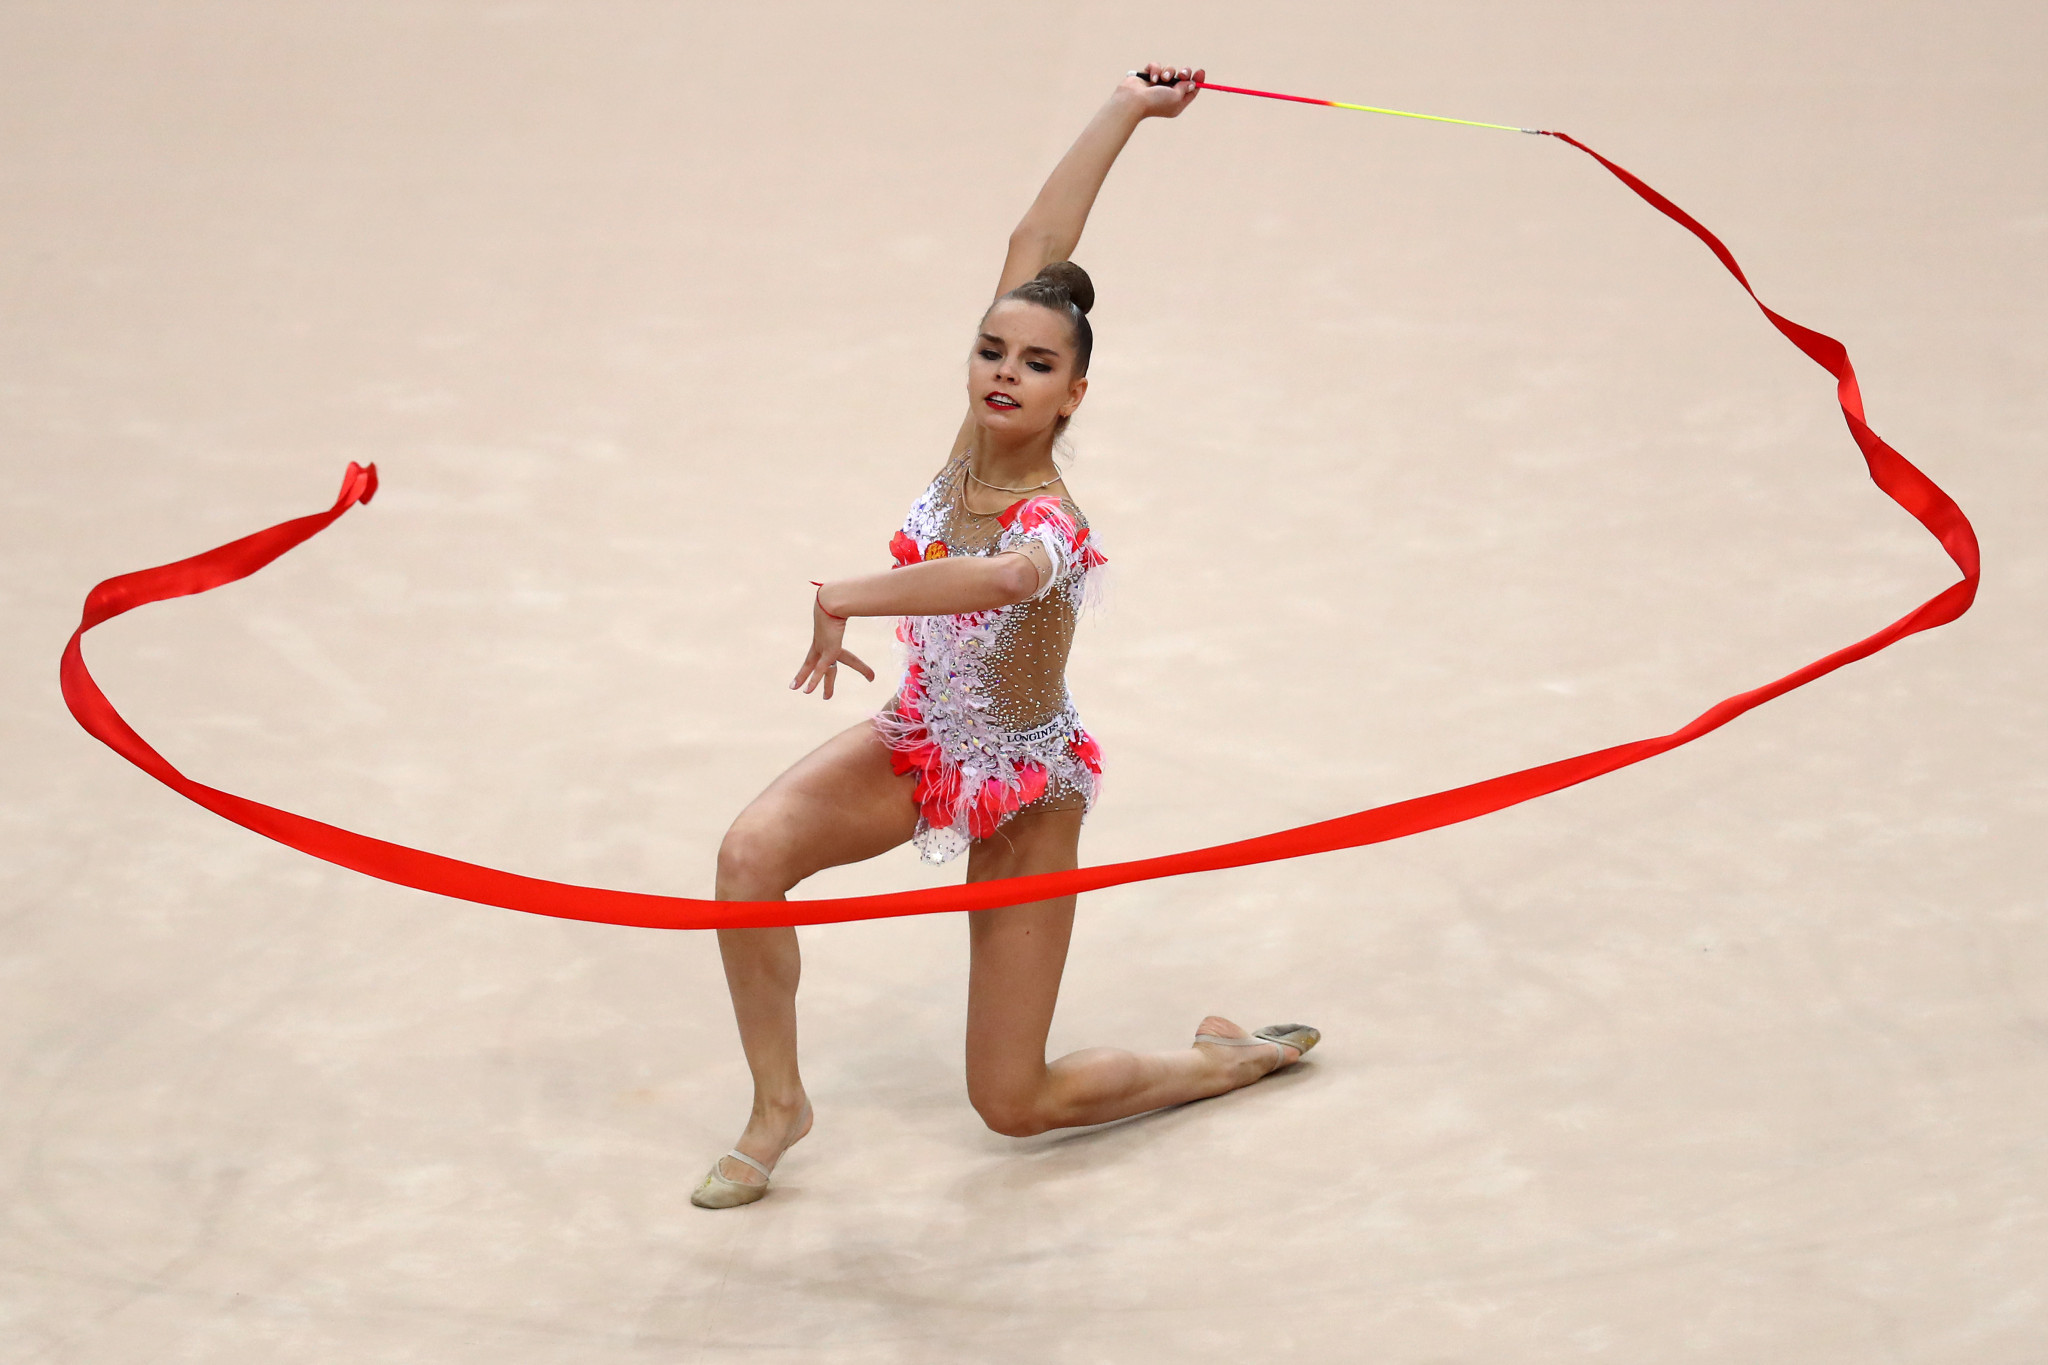 World champion Averina claims third gold of Minsk 2019 in rhythmic gymnastics